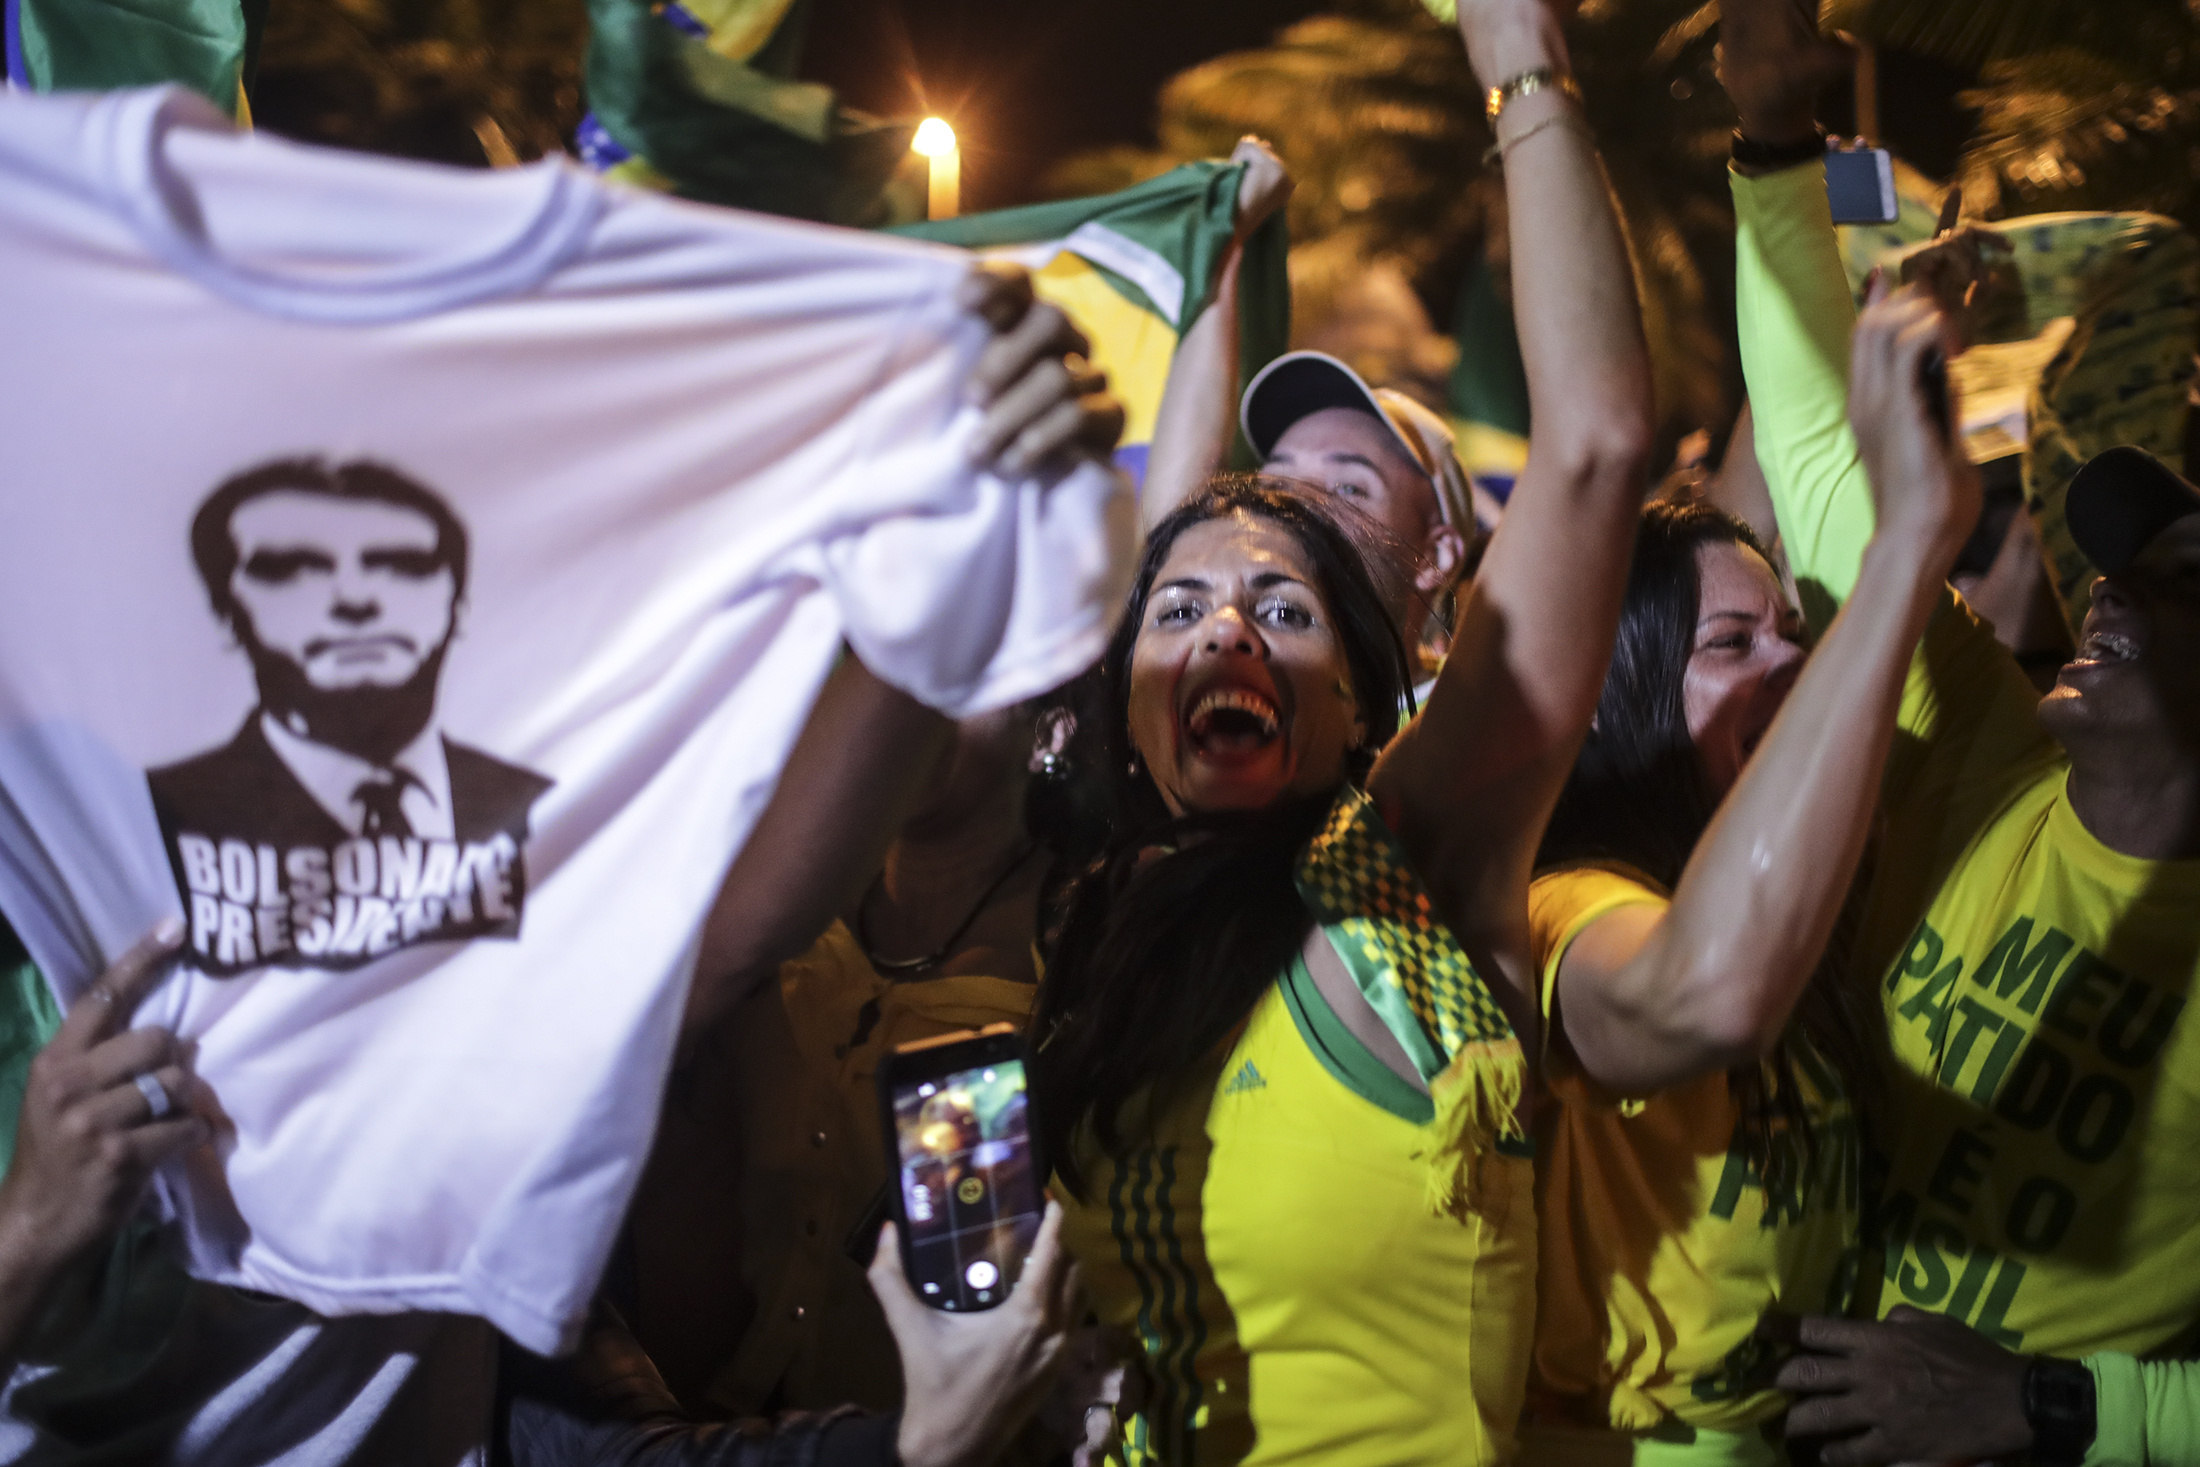  Peña Nieto felicita a Bolsonaro por triunfo en Brasil tras “ejemplar jornada”